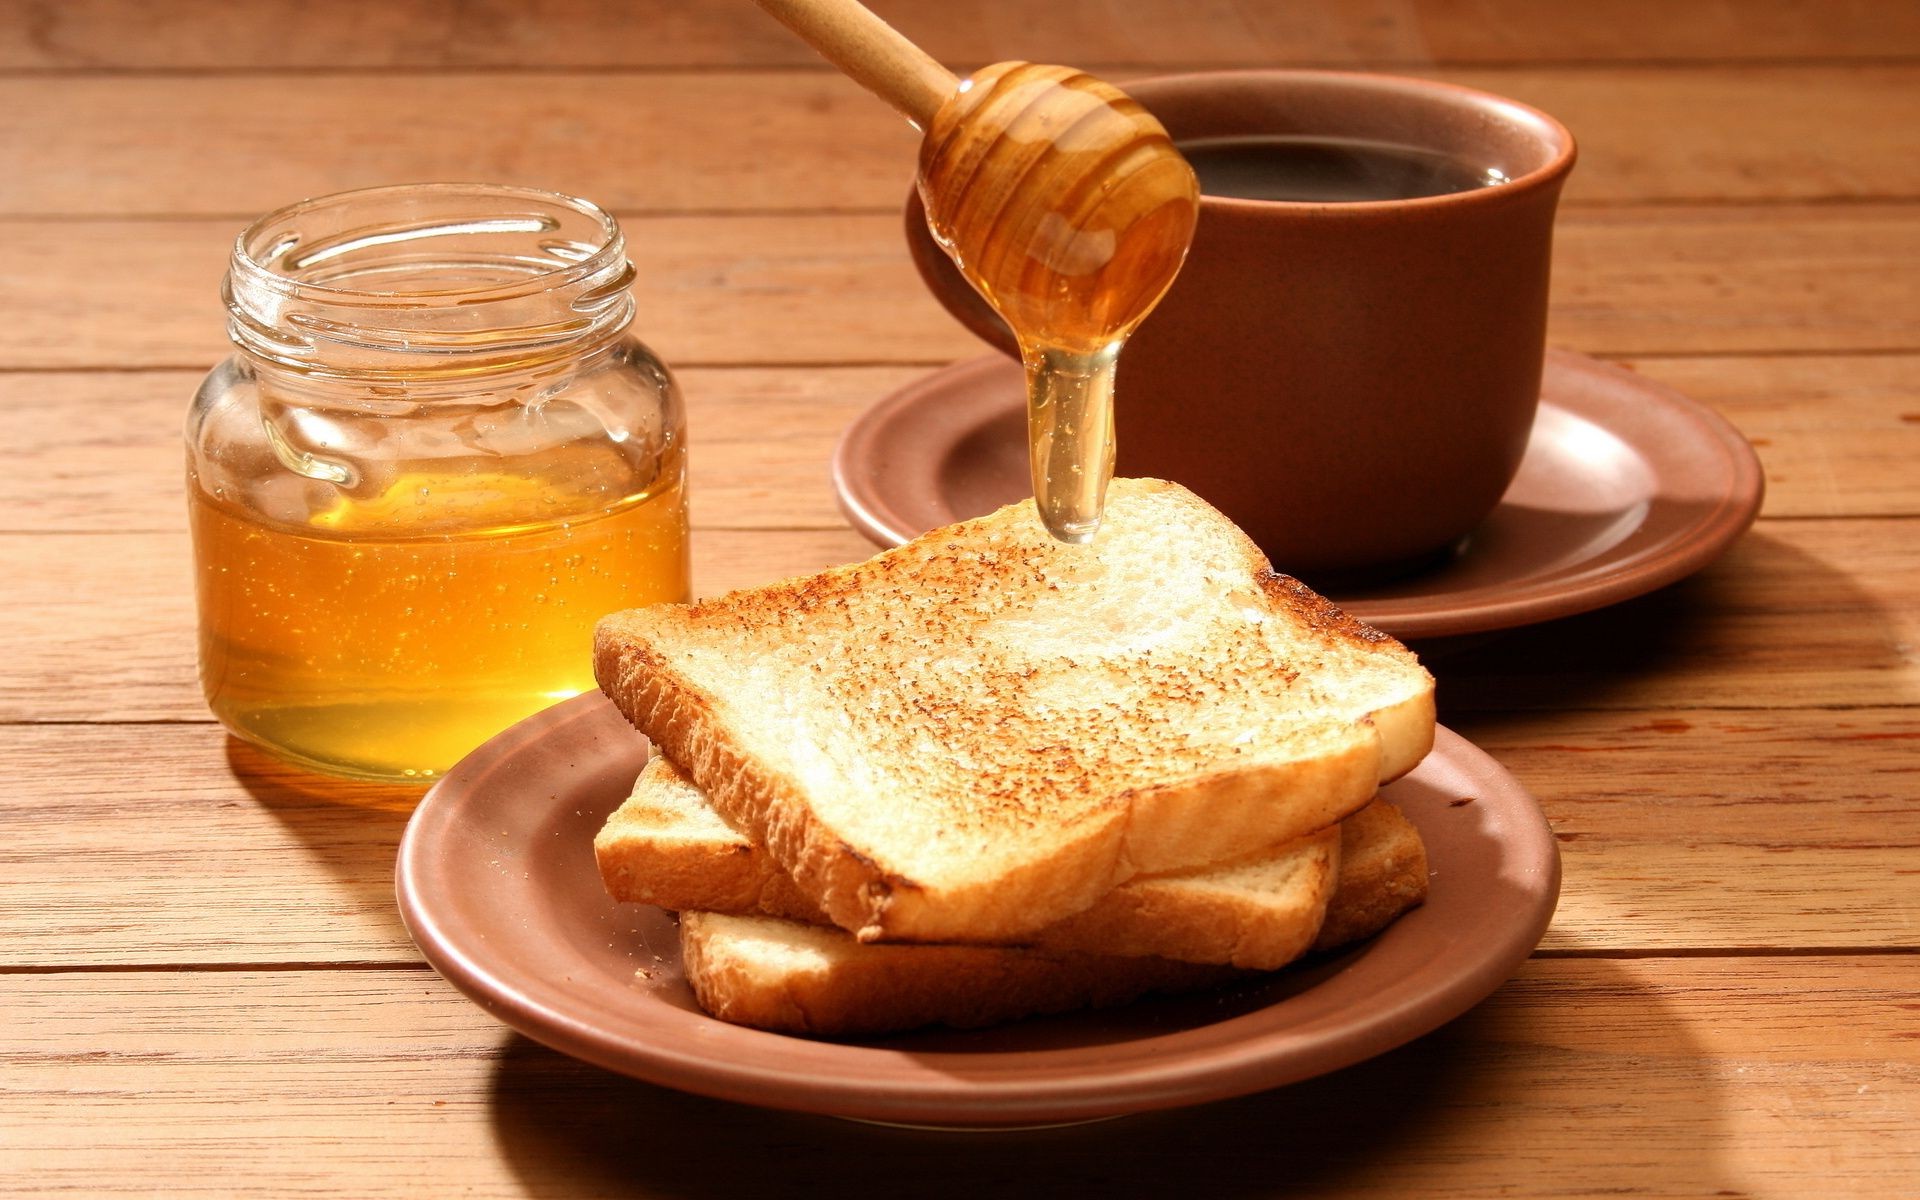 breakfast honey food wood spoon sweet grow bread delicious jar wooden table nutrition jam healthy homemade glass toast dawn